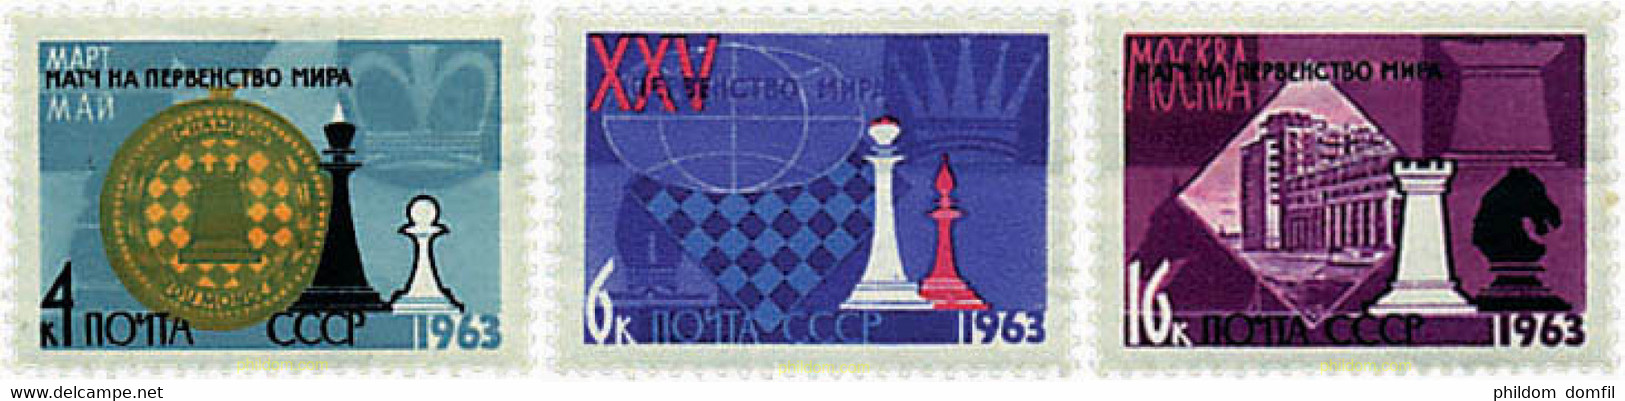 30753 MNH UNION SOVIETICA 1963 25 CAMPEONATO DE AJEDREZ EN MOSCU - Collections